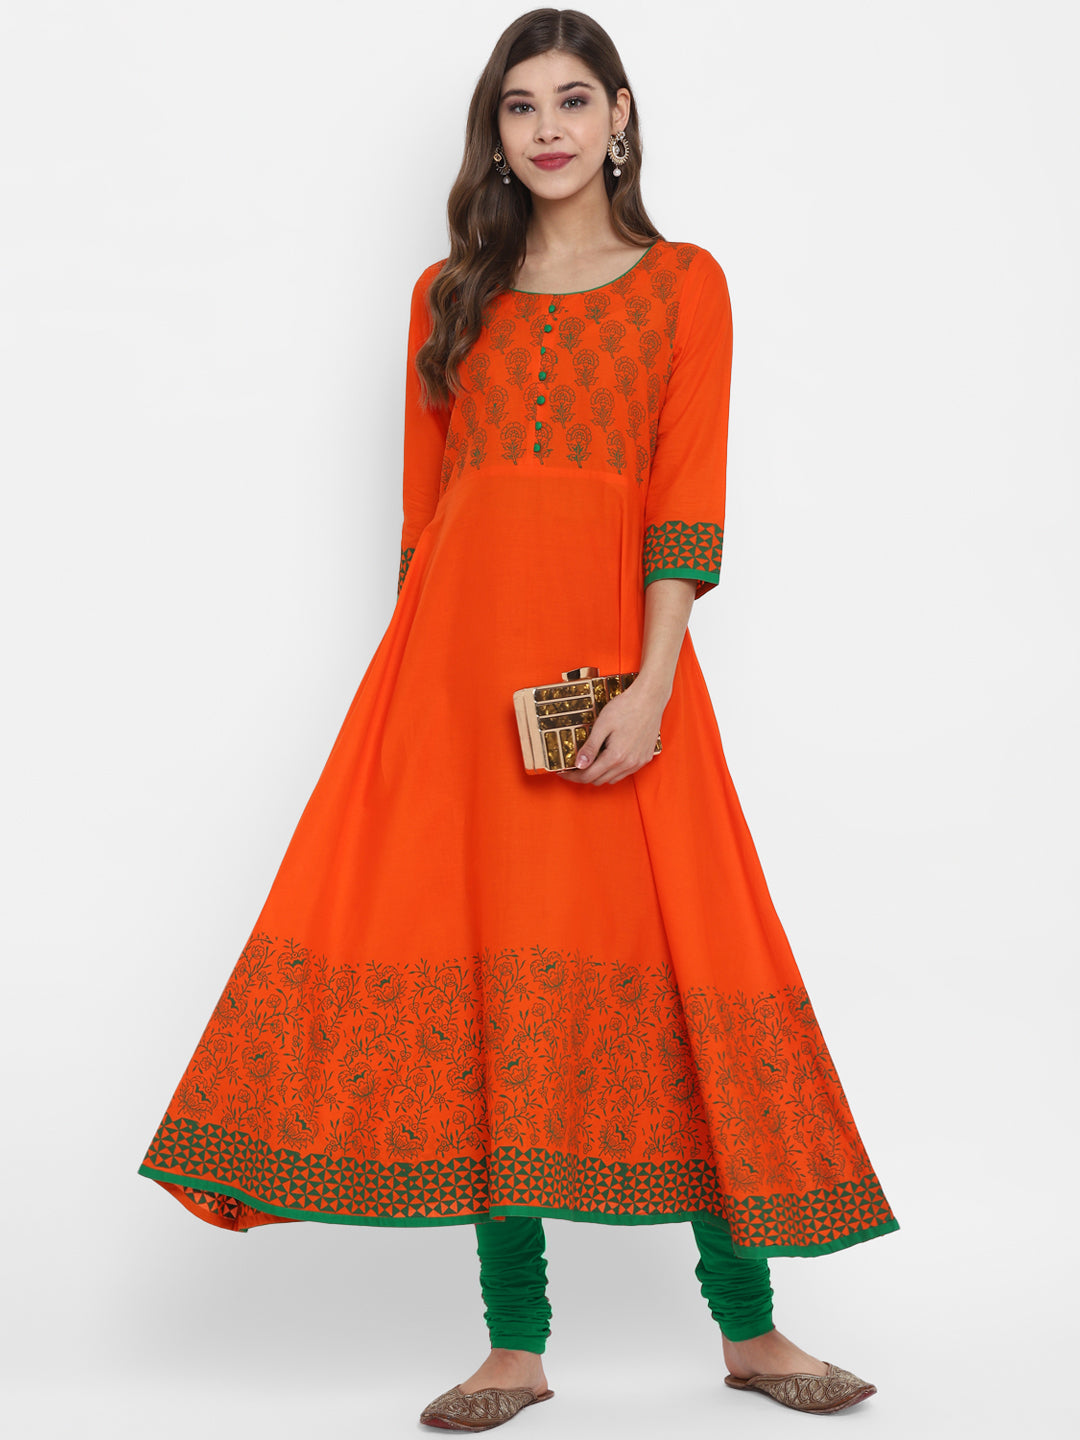 Women's Orange & Green Cotton Printed Anarkali Kurti With Block Print - Wahe-Noor